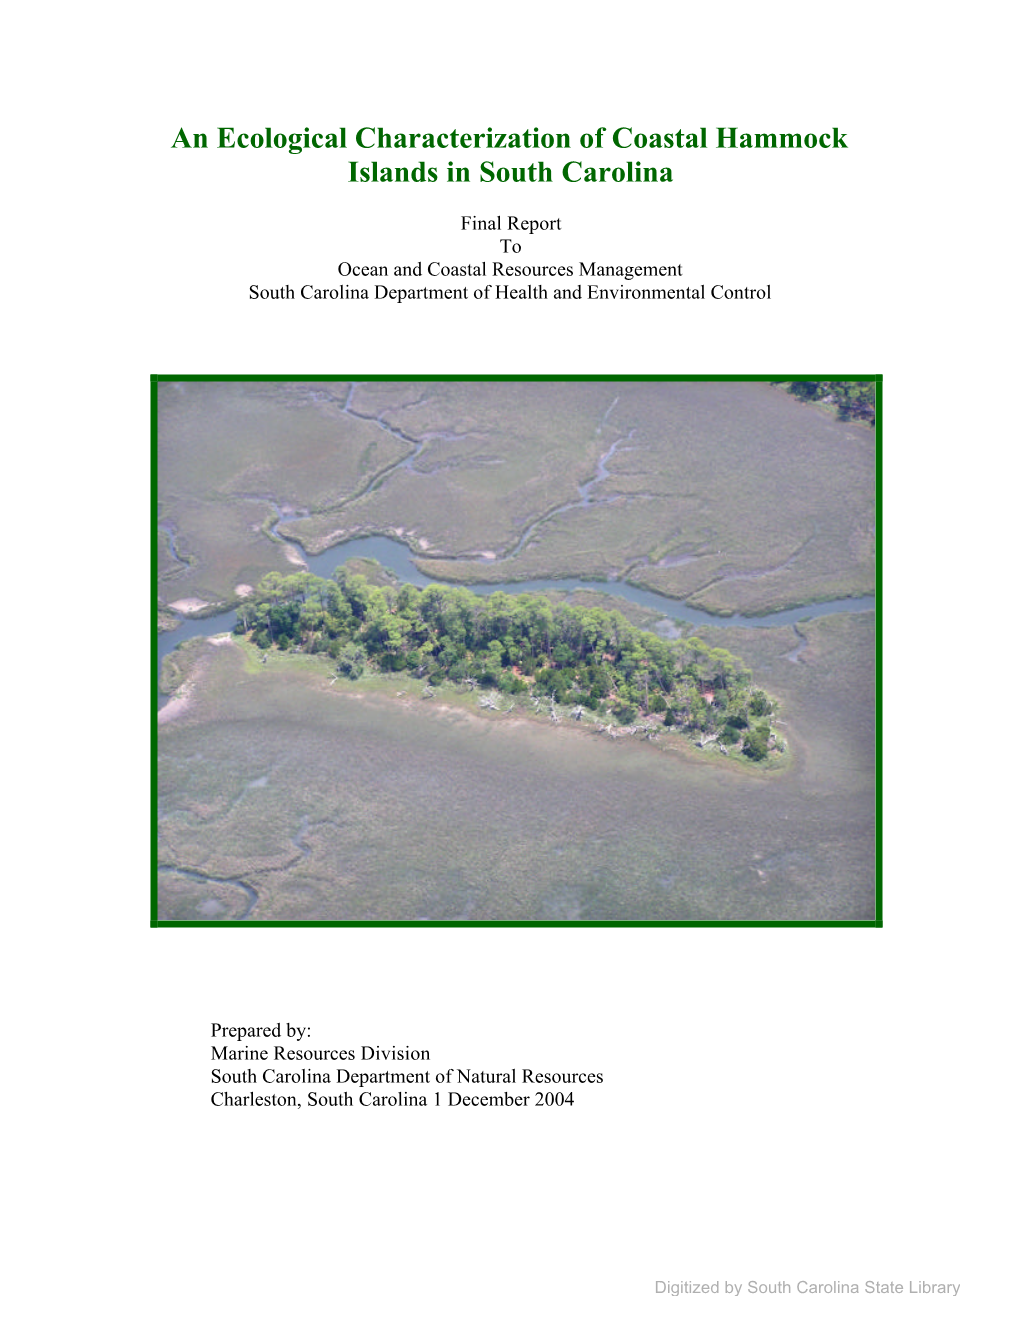 An Ecological Characterization of Coastal Hammock Islands in South Carolina